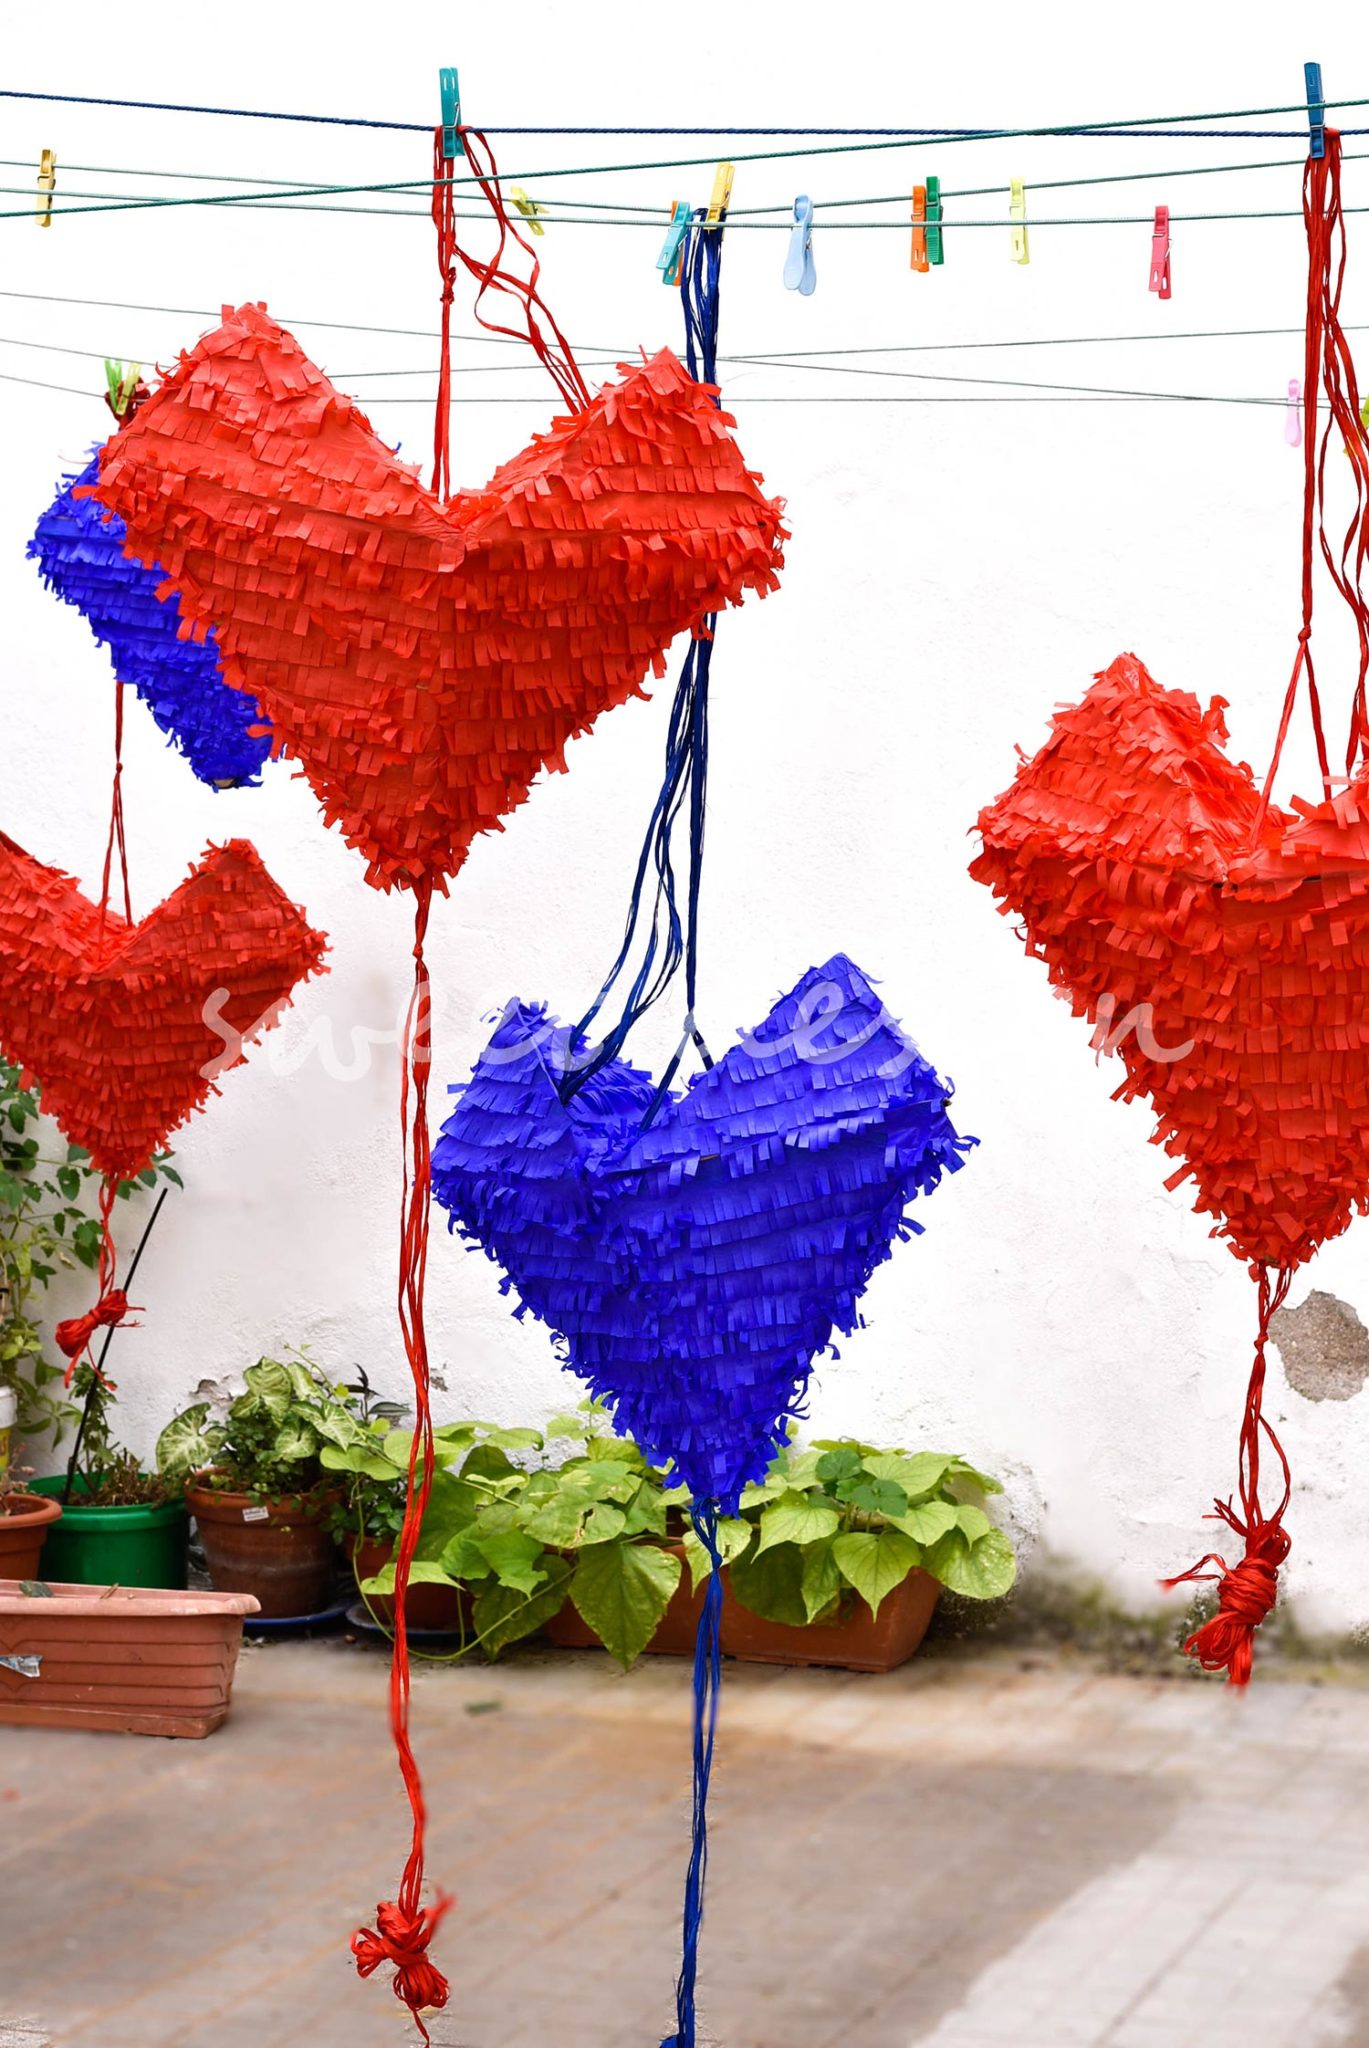 Piñata Artesana con forma de Corazón - Sweet Design